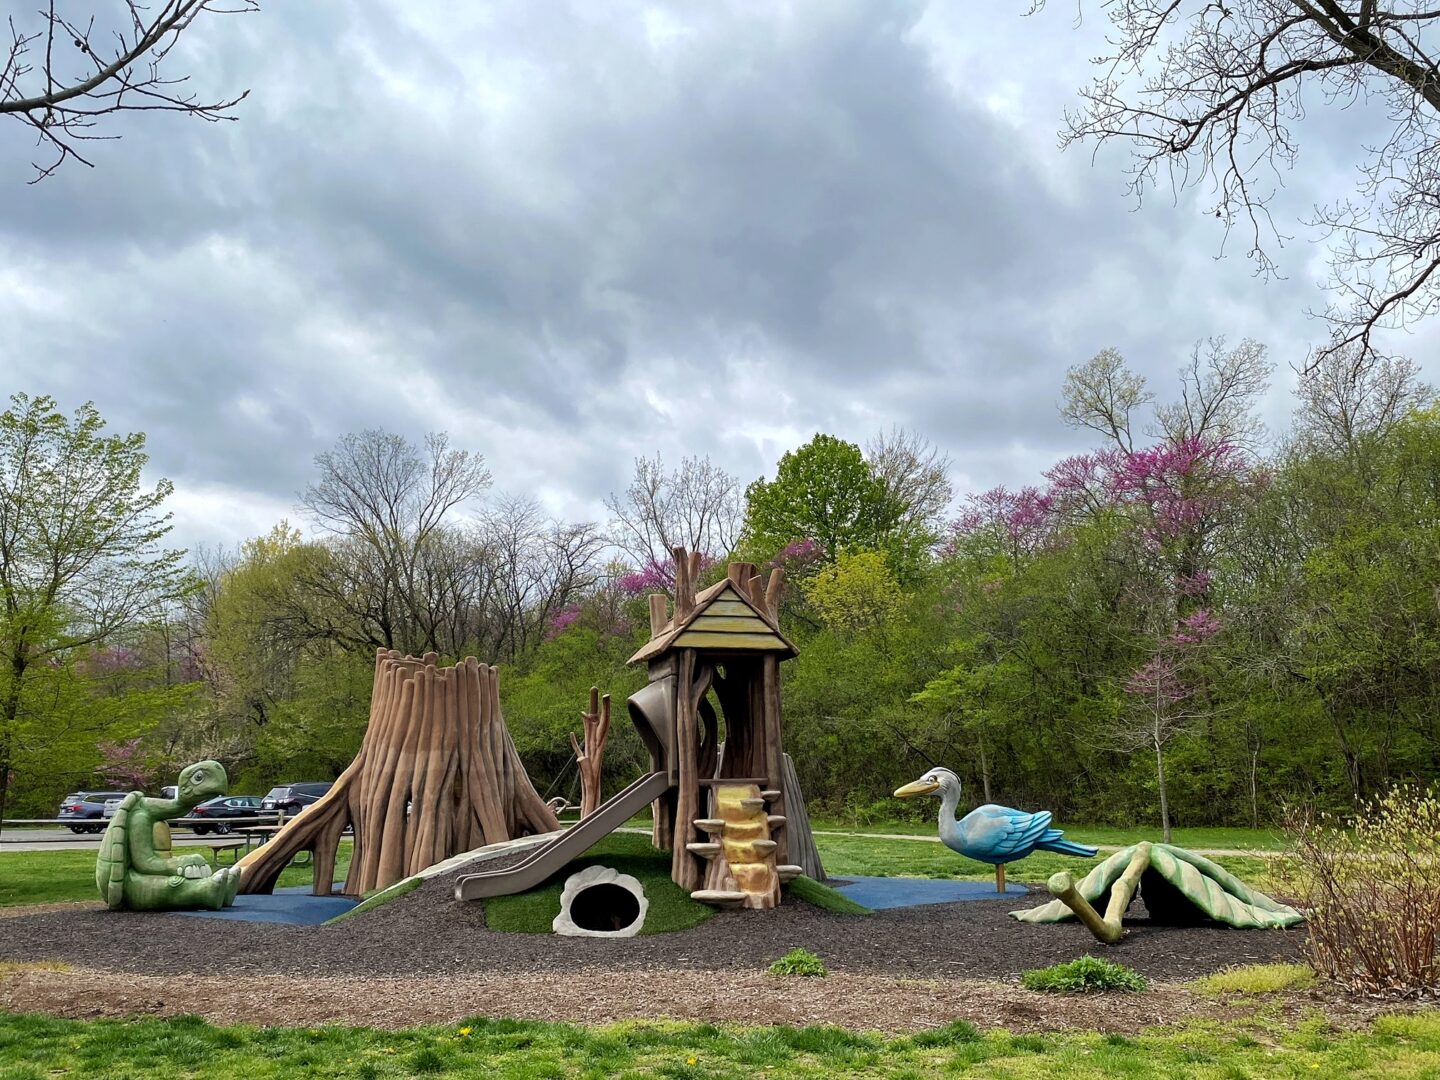 Playground at FarnsWorth Park, Toledo, Ohio